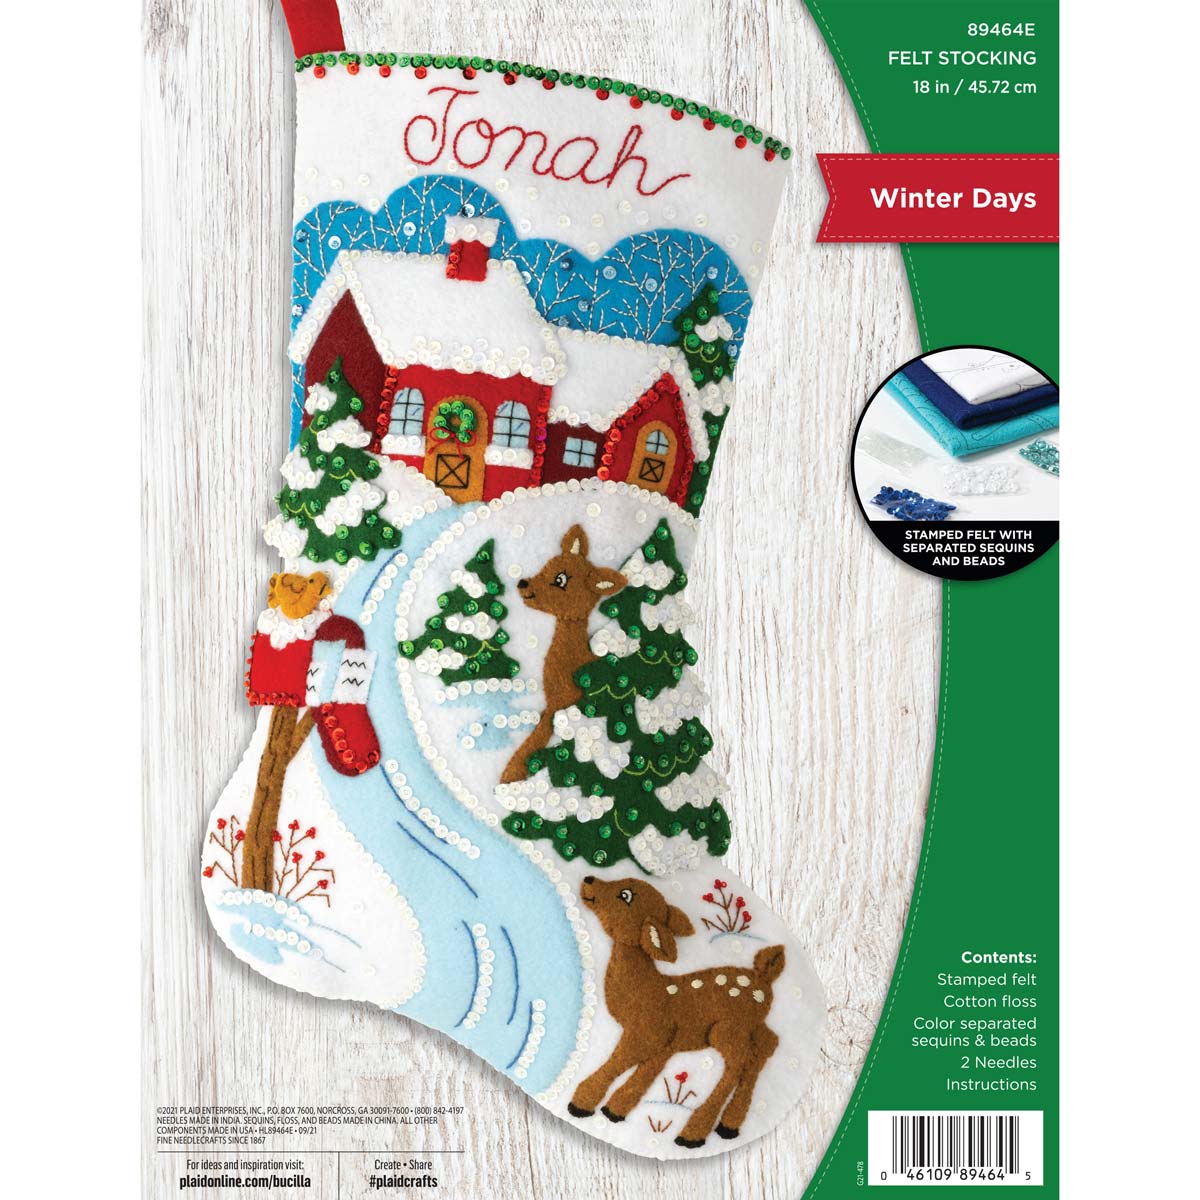 Bucilla ® Seasonal - Felt - Stocking Kits - Santa's Christmas Carols -  89539E